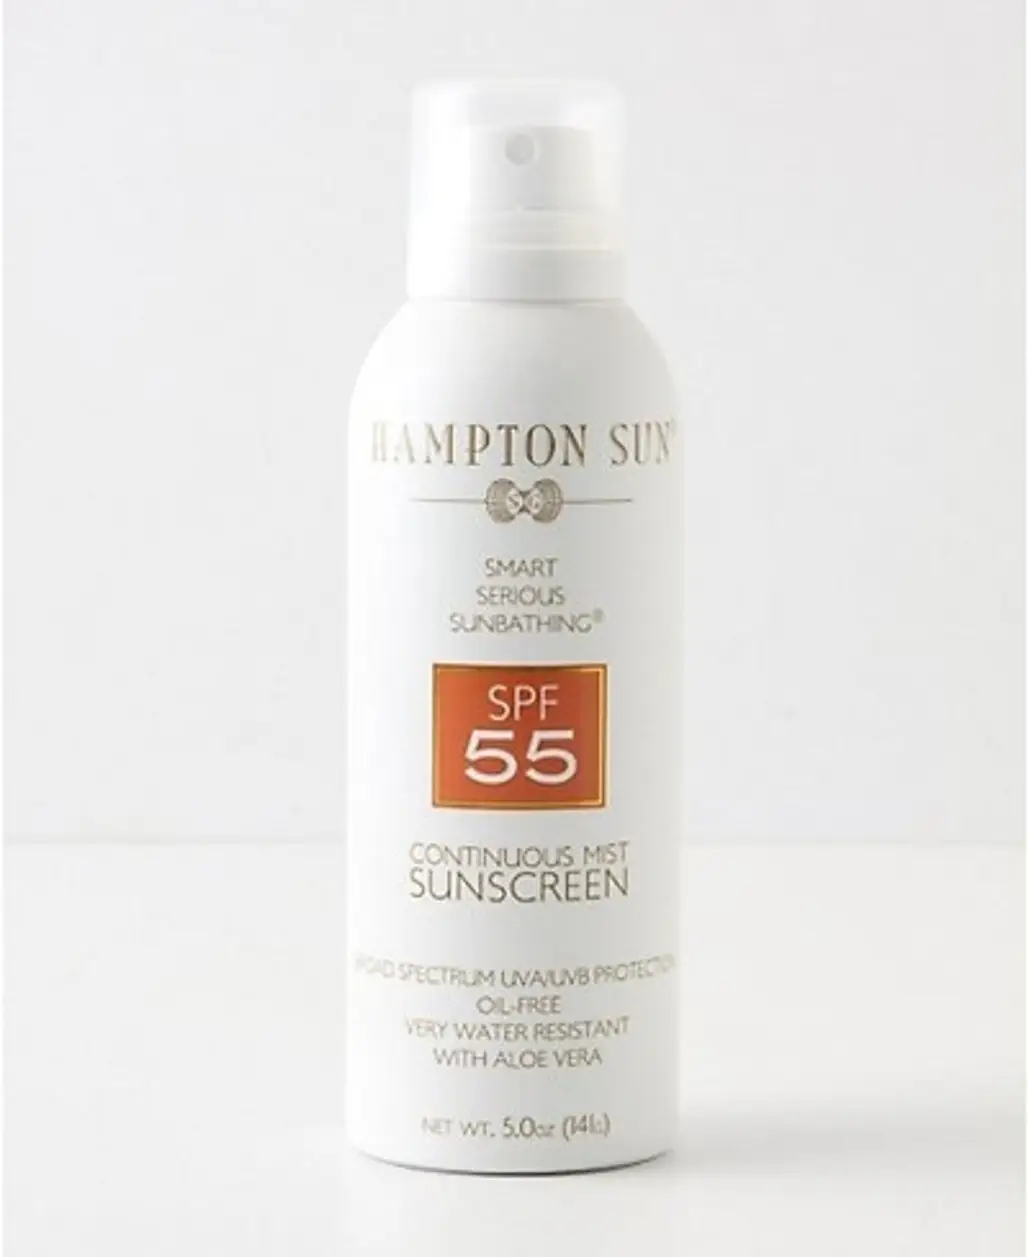 Hampton Sun SPF 55 Continuous Mist